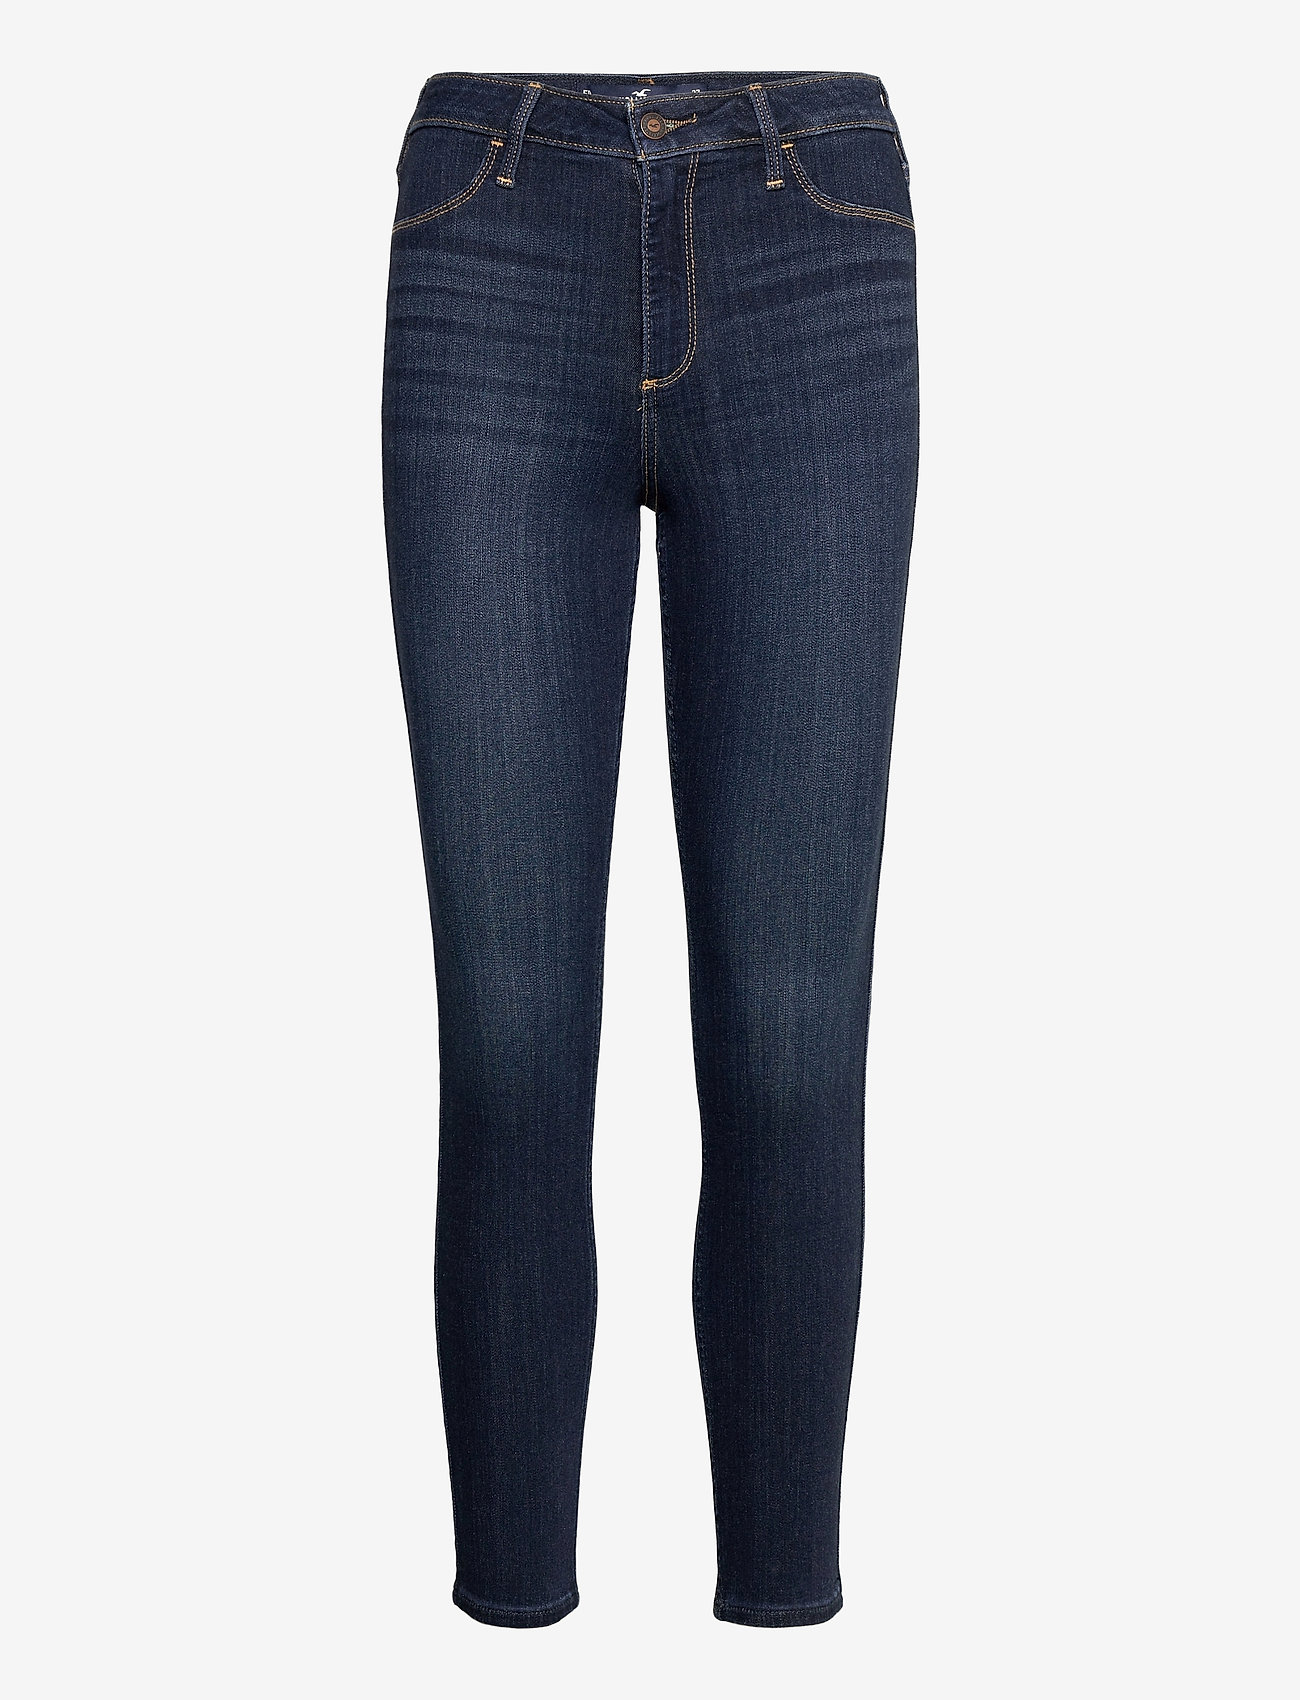 hollister girls jeans